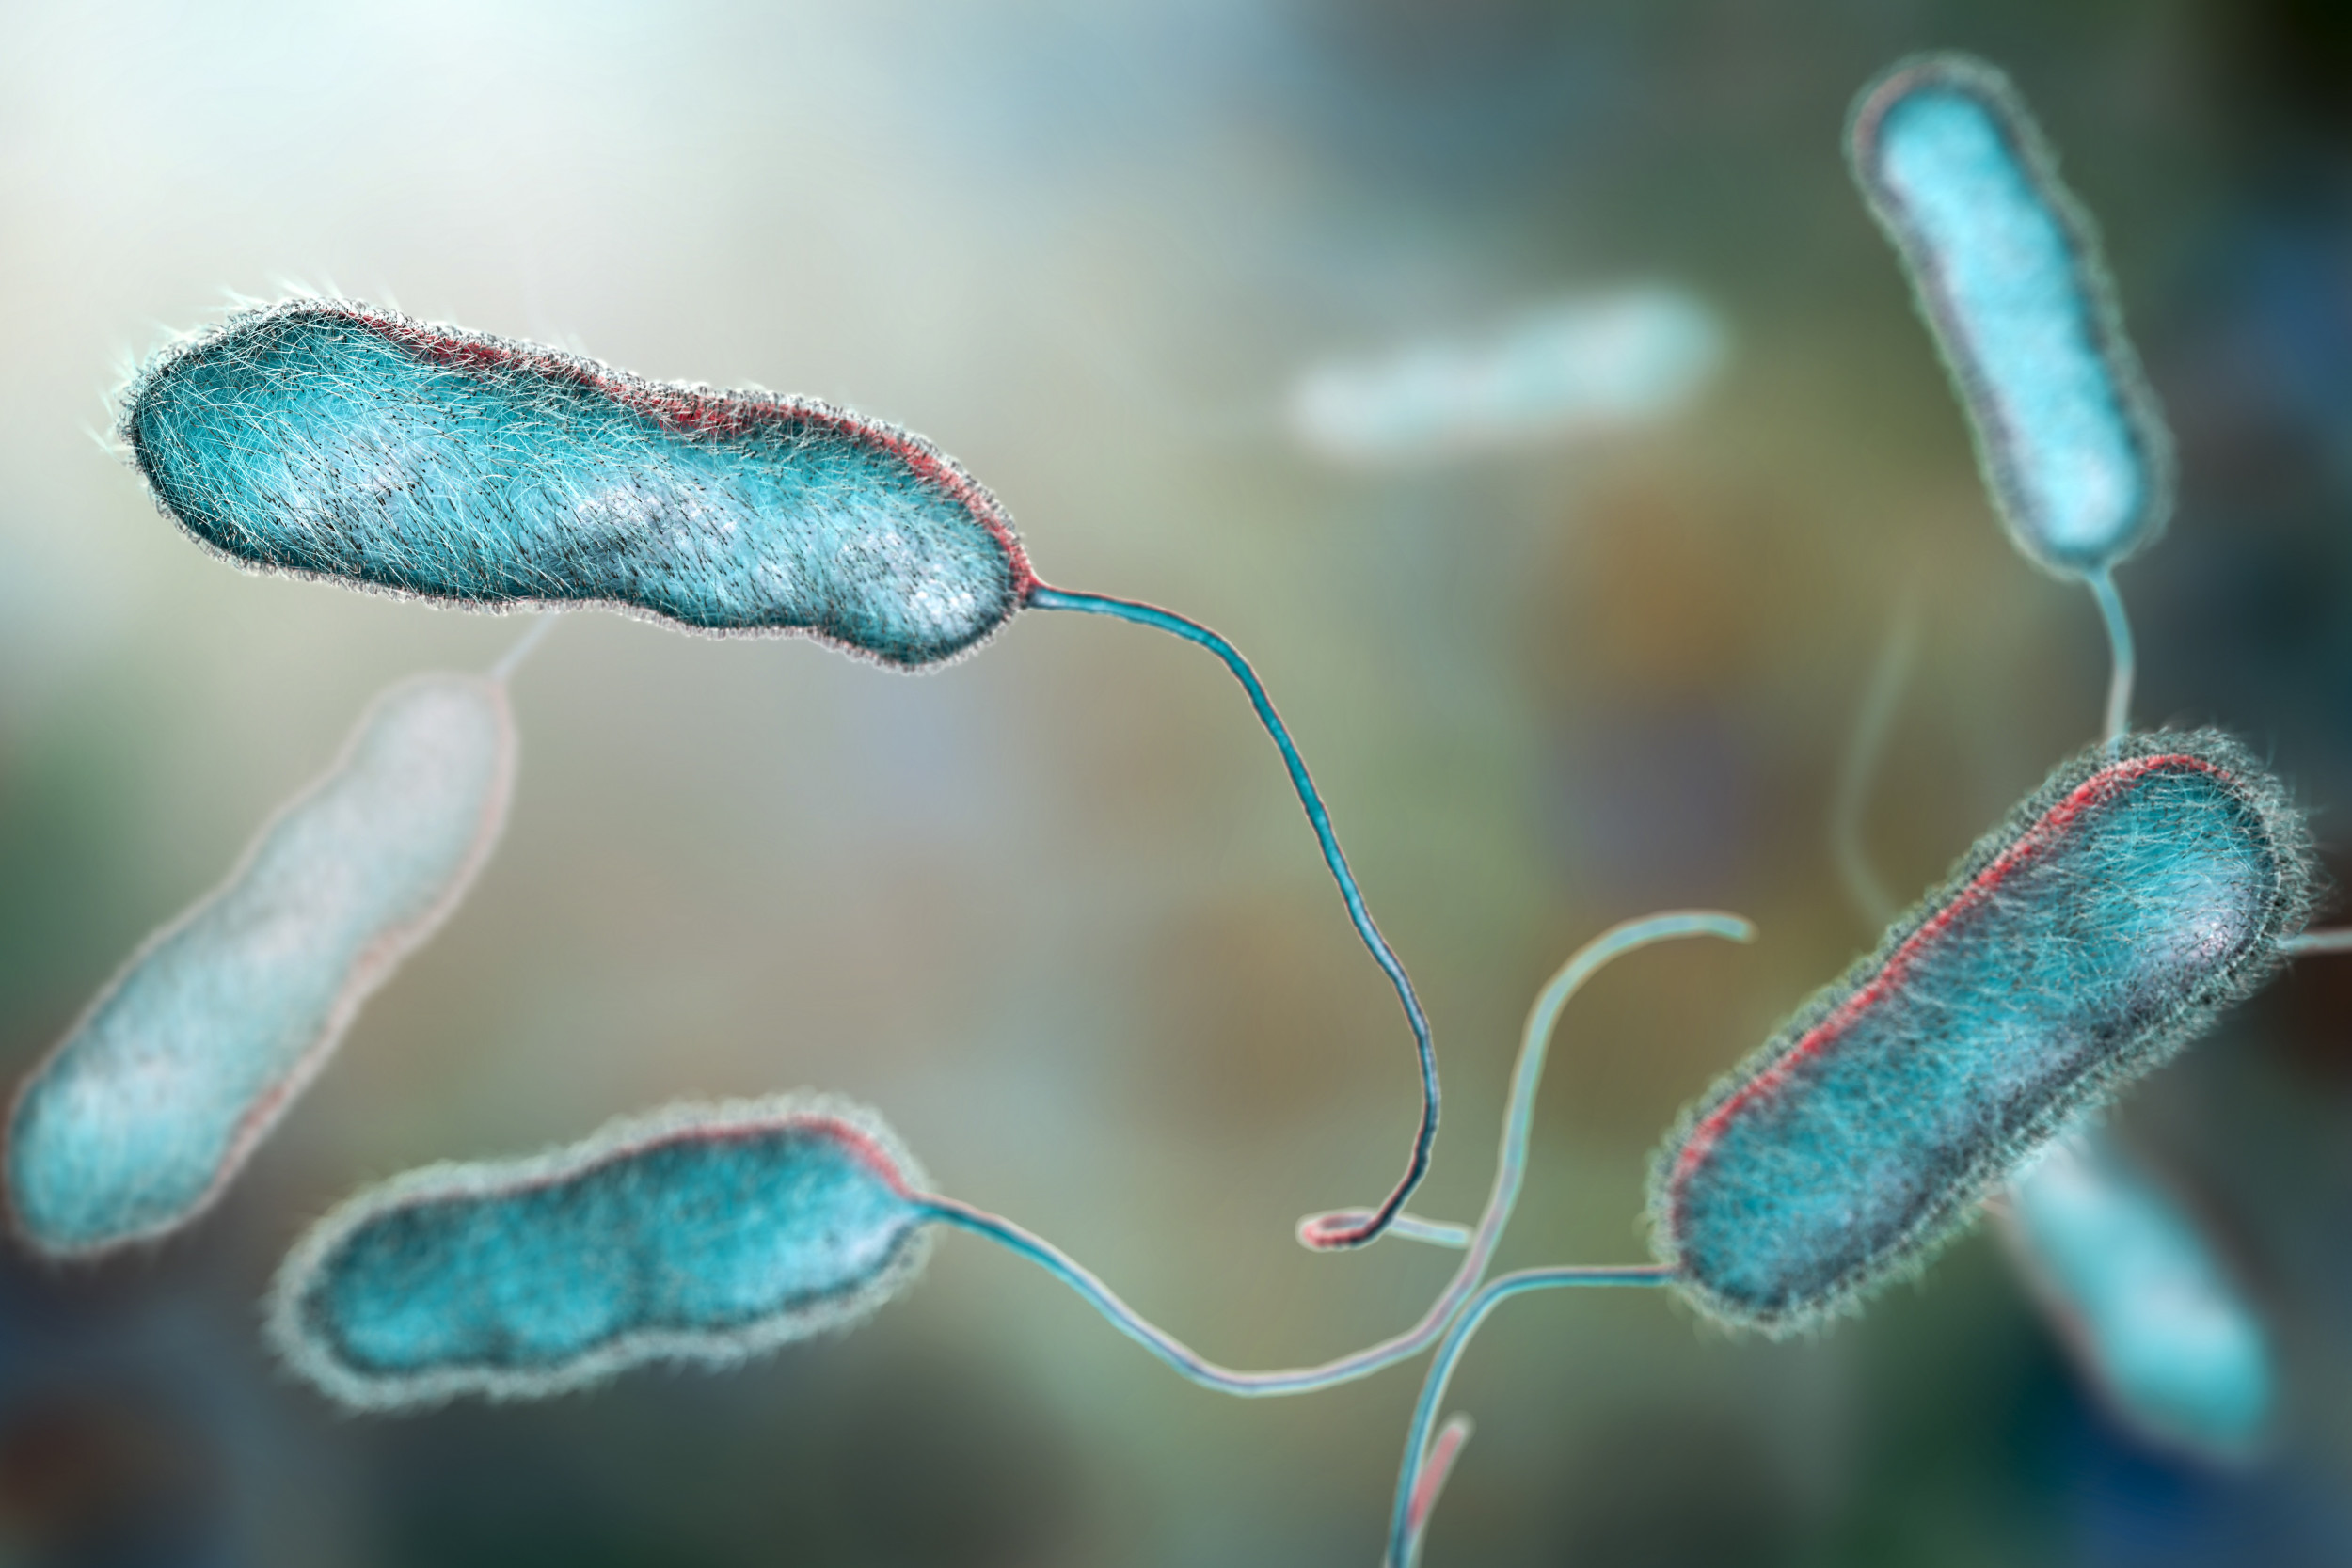 Legionella Bacteria Symptoms Explained After Duke University Outbreak